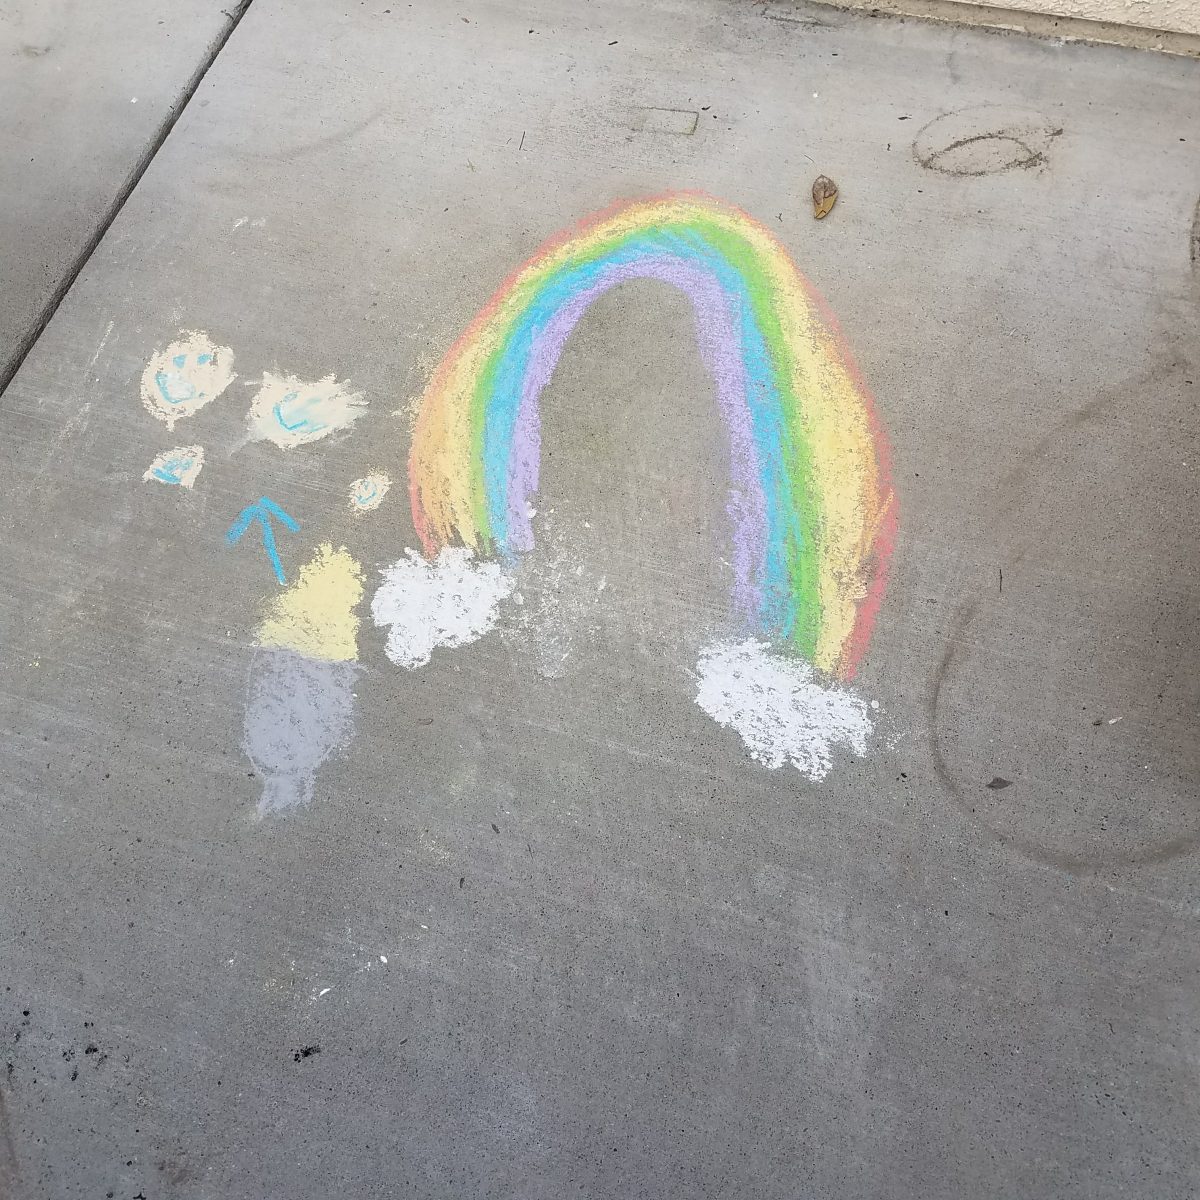 childs drawing in chalk of a rainbow on dirty sidewalk